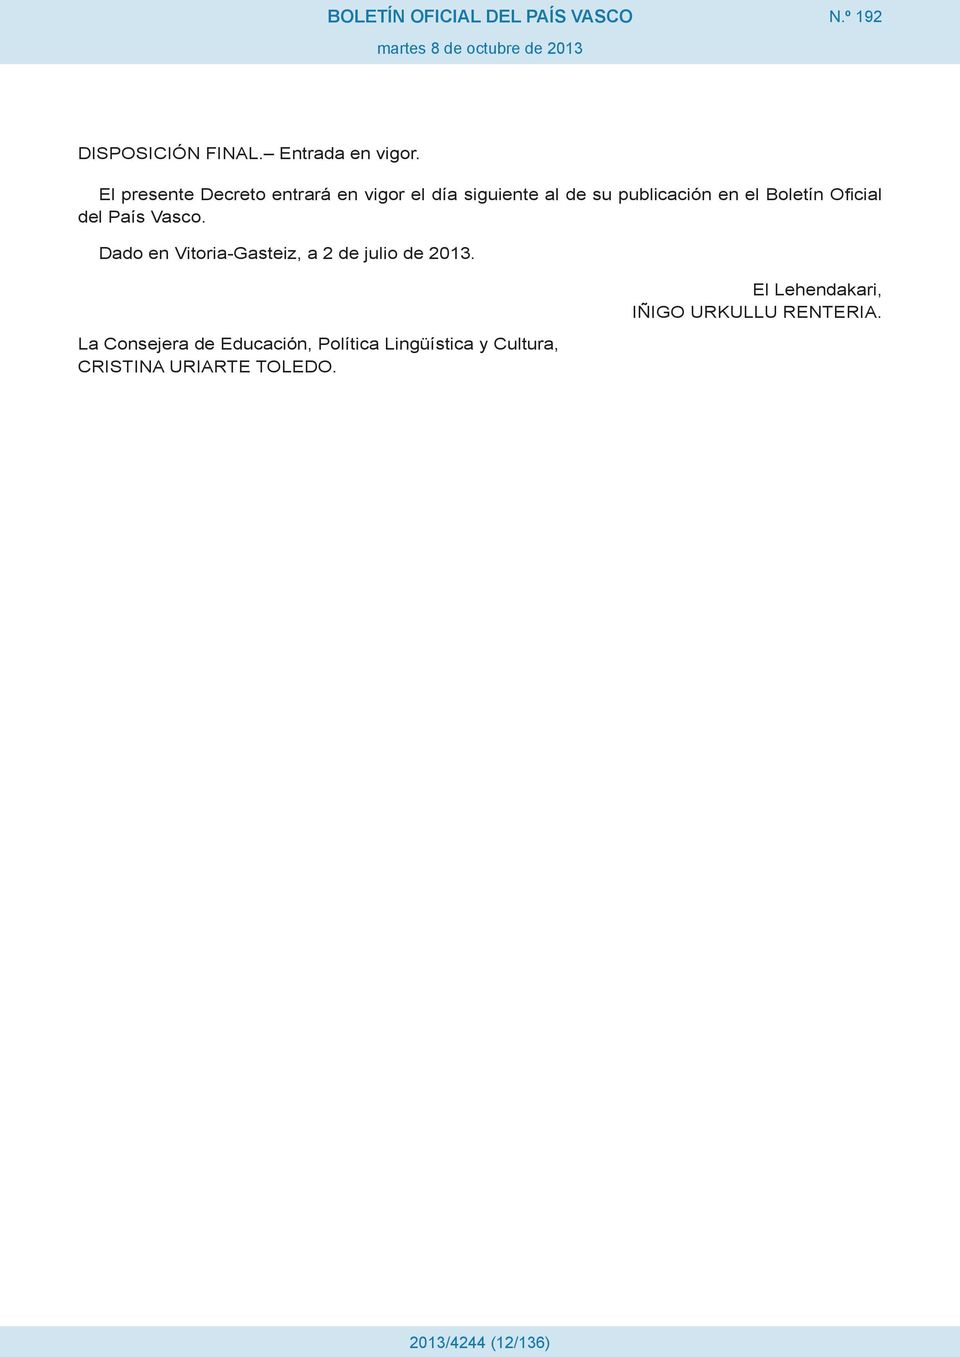 Boletín Oficial del País Vasco. Dado en Vitoria-Gasteiz, a 2 de julio de 2013.